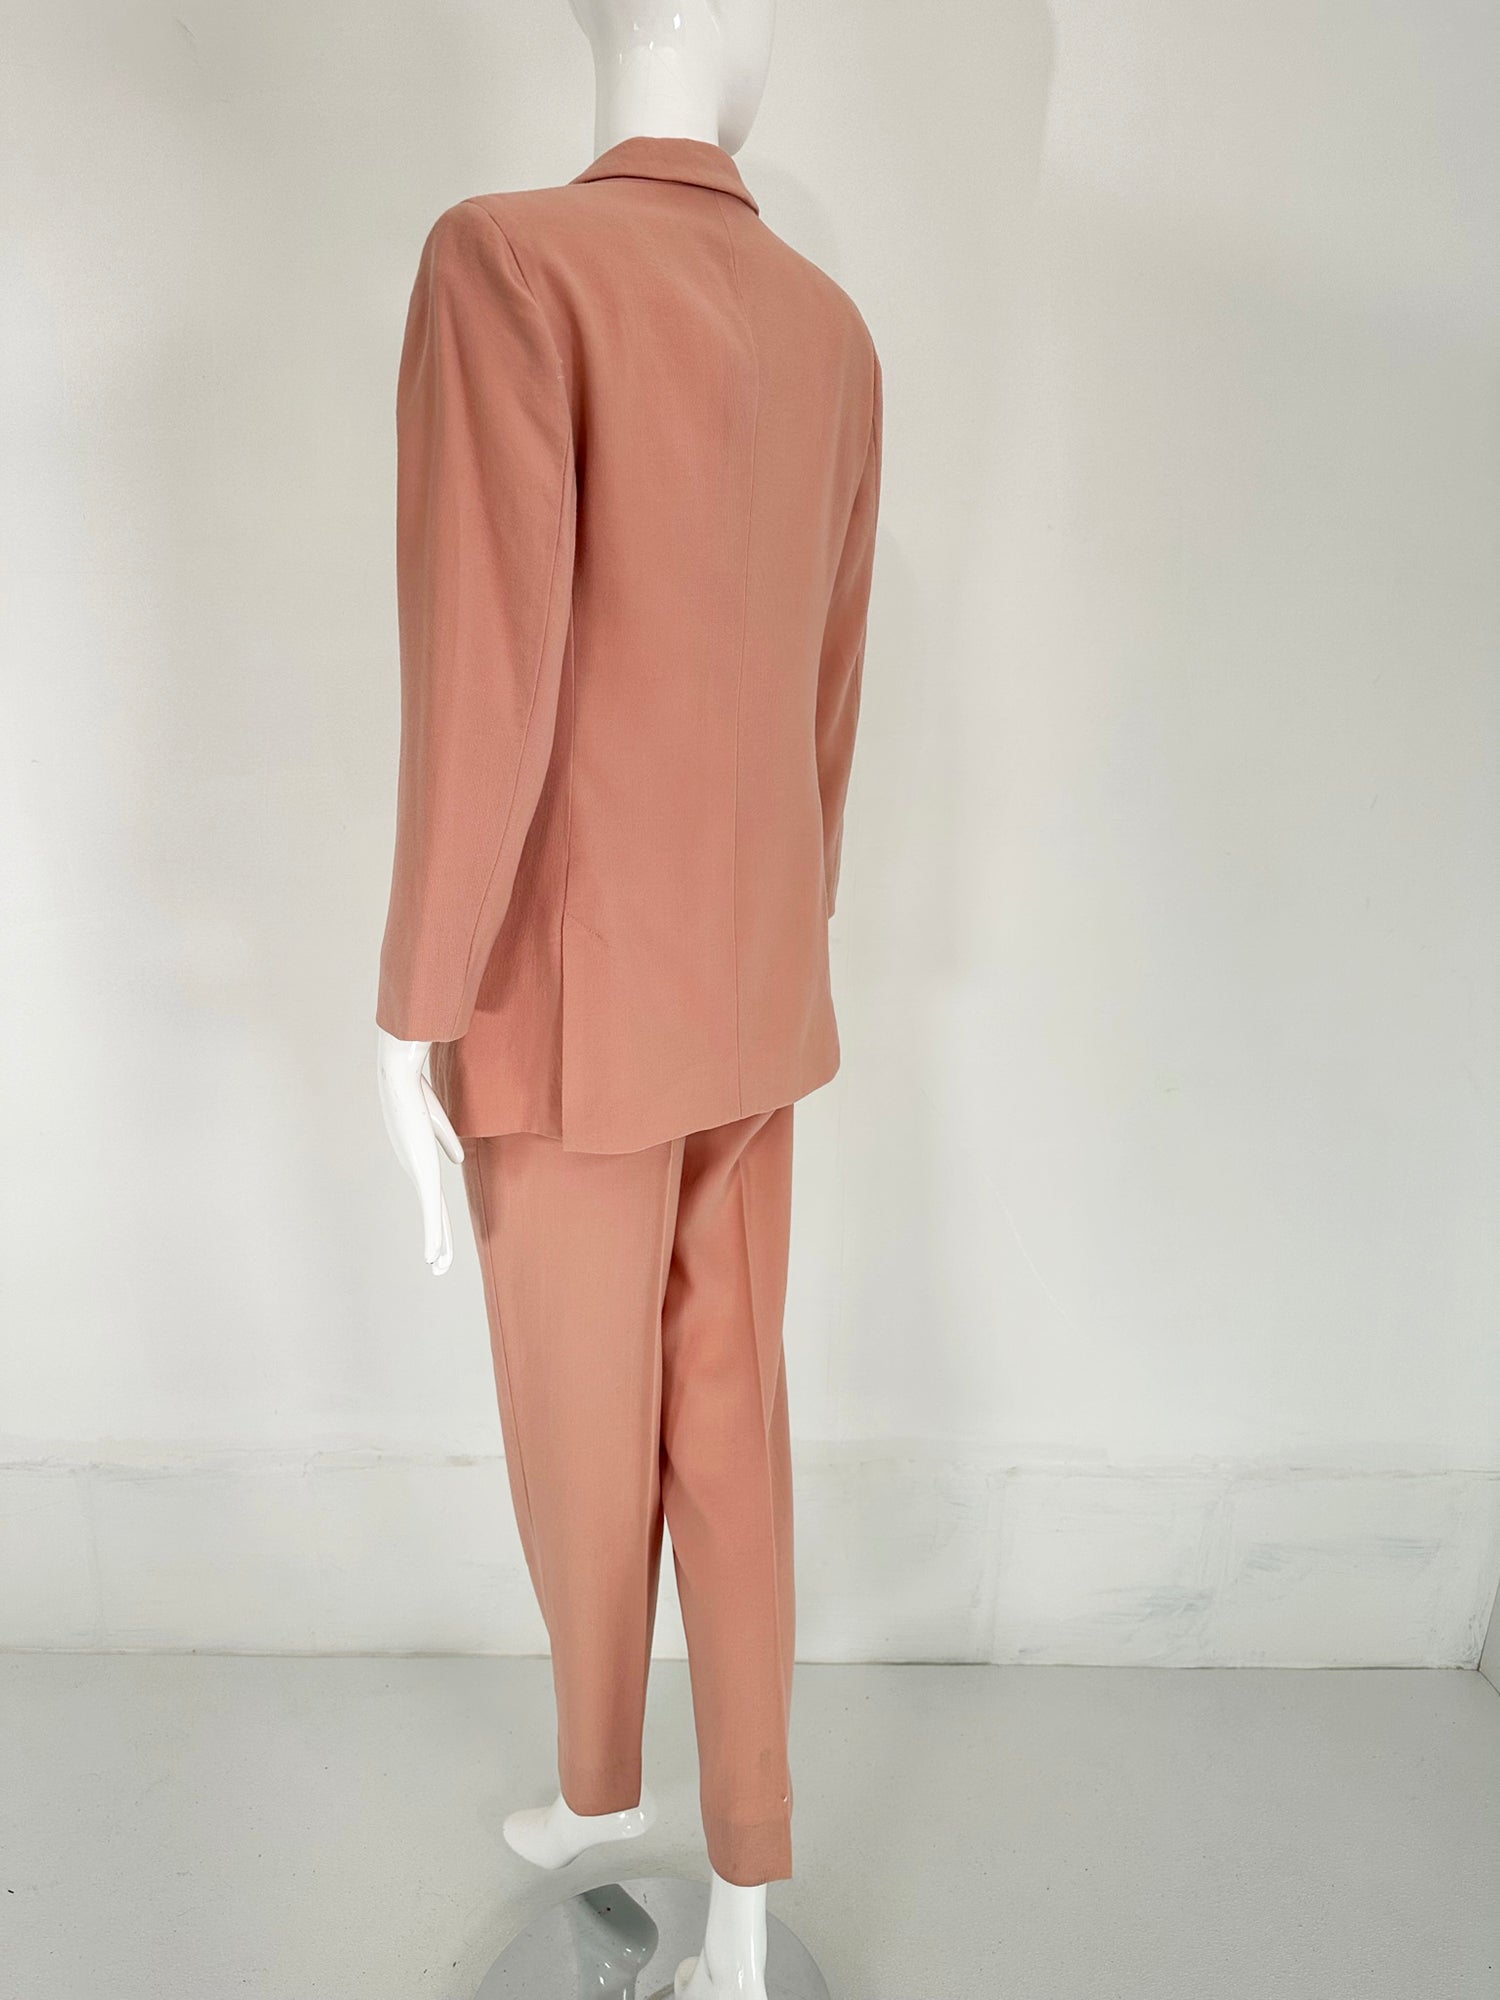 SOLD Giorgio Armani Peach Light Wool Double Breasted Pant Set